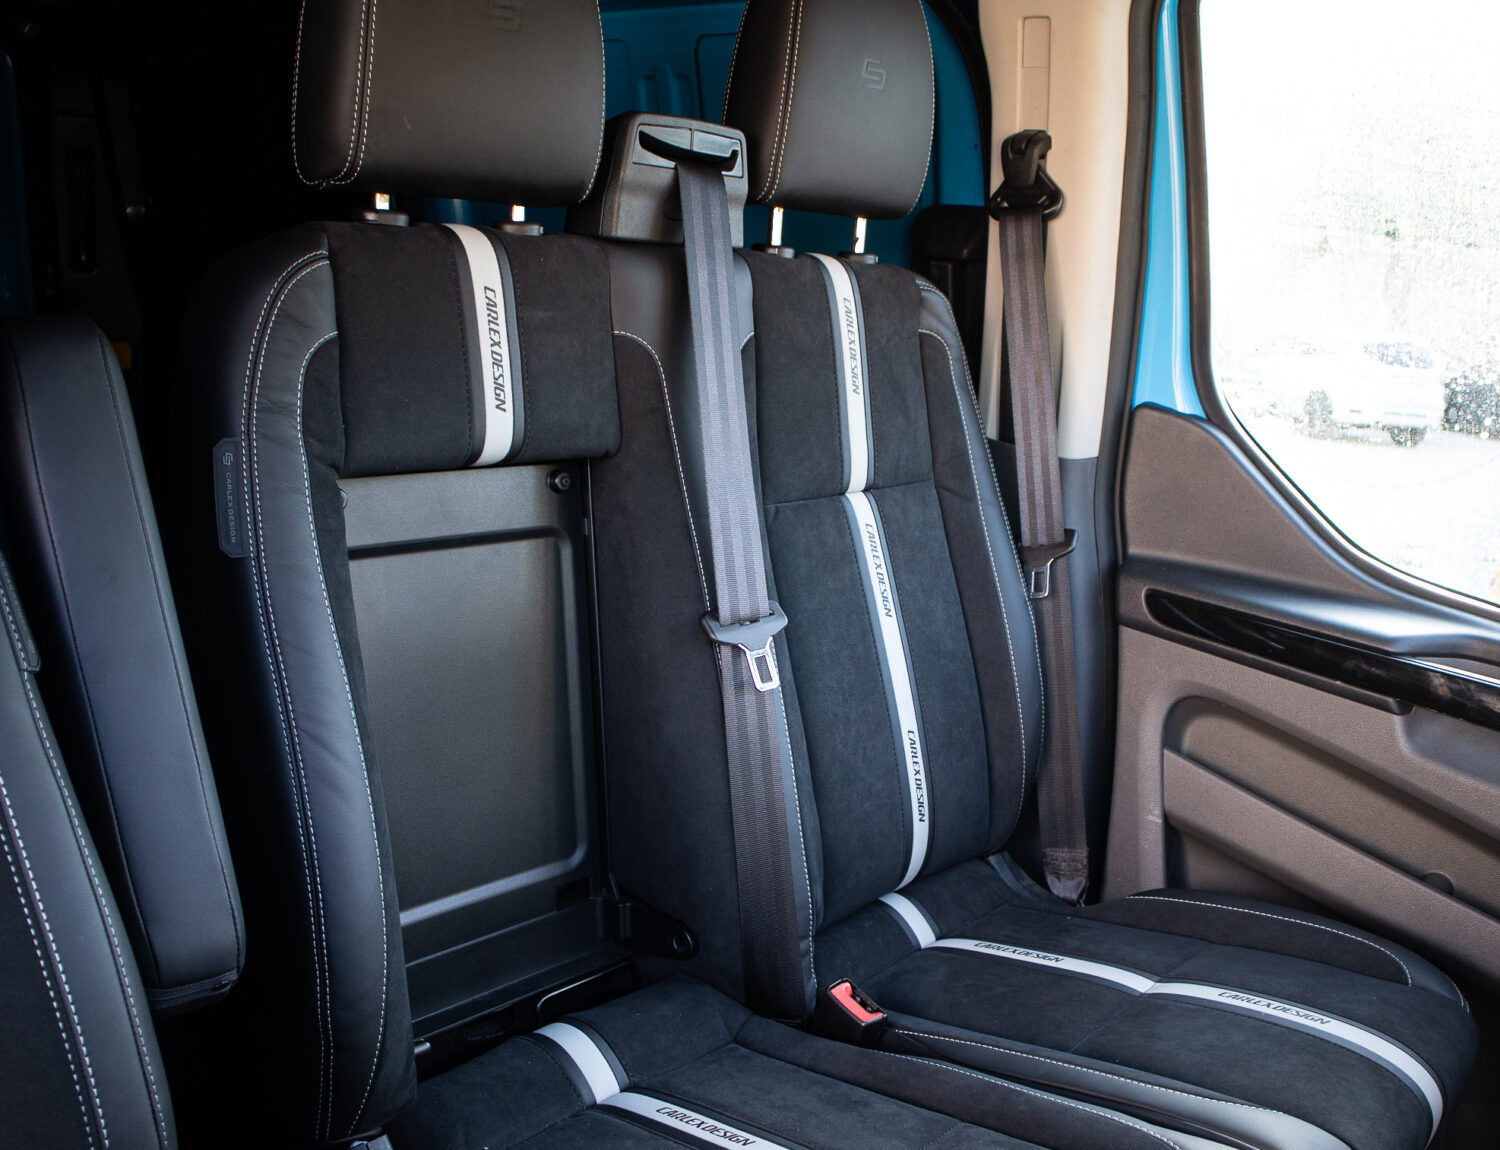 Ford Transit Custom Carlex Design Final Edition in KLM Blue - Vortex Vans